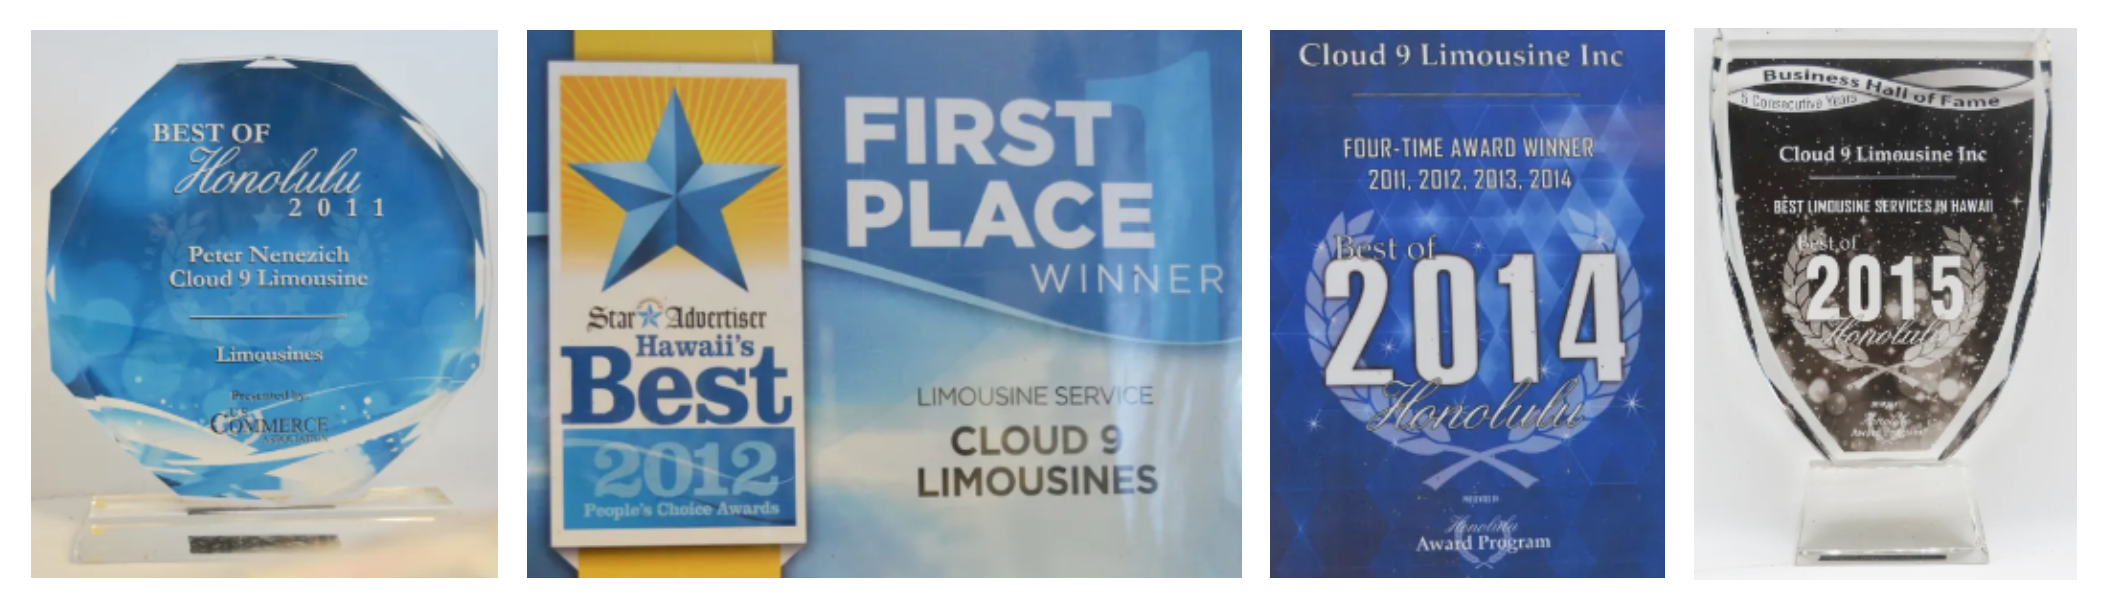 Cloud 9 Limousine Awards